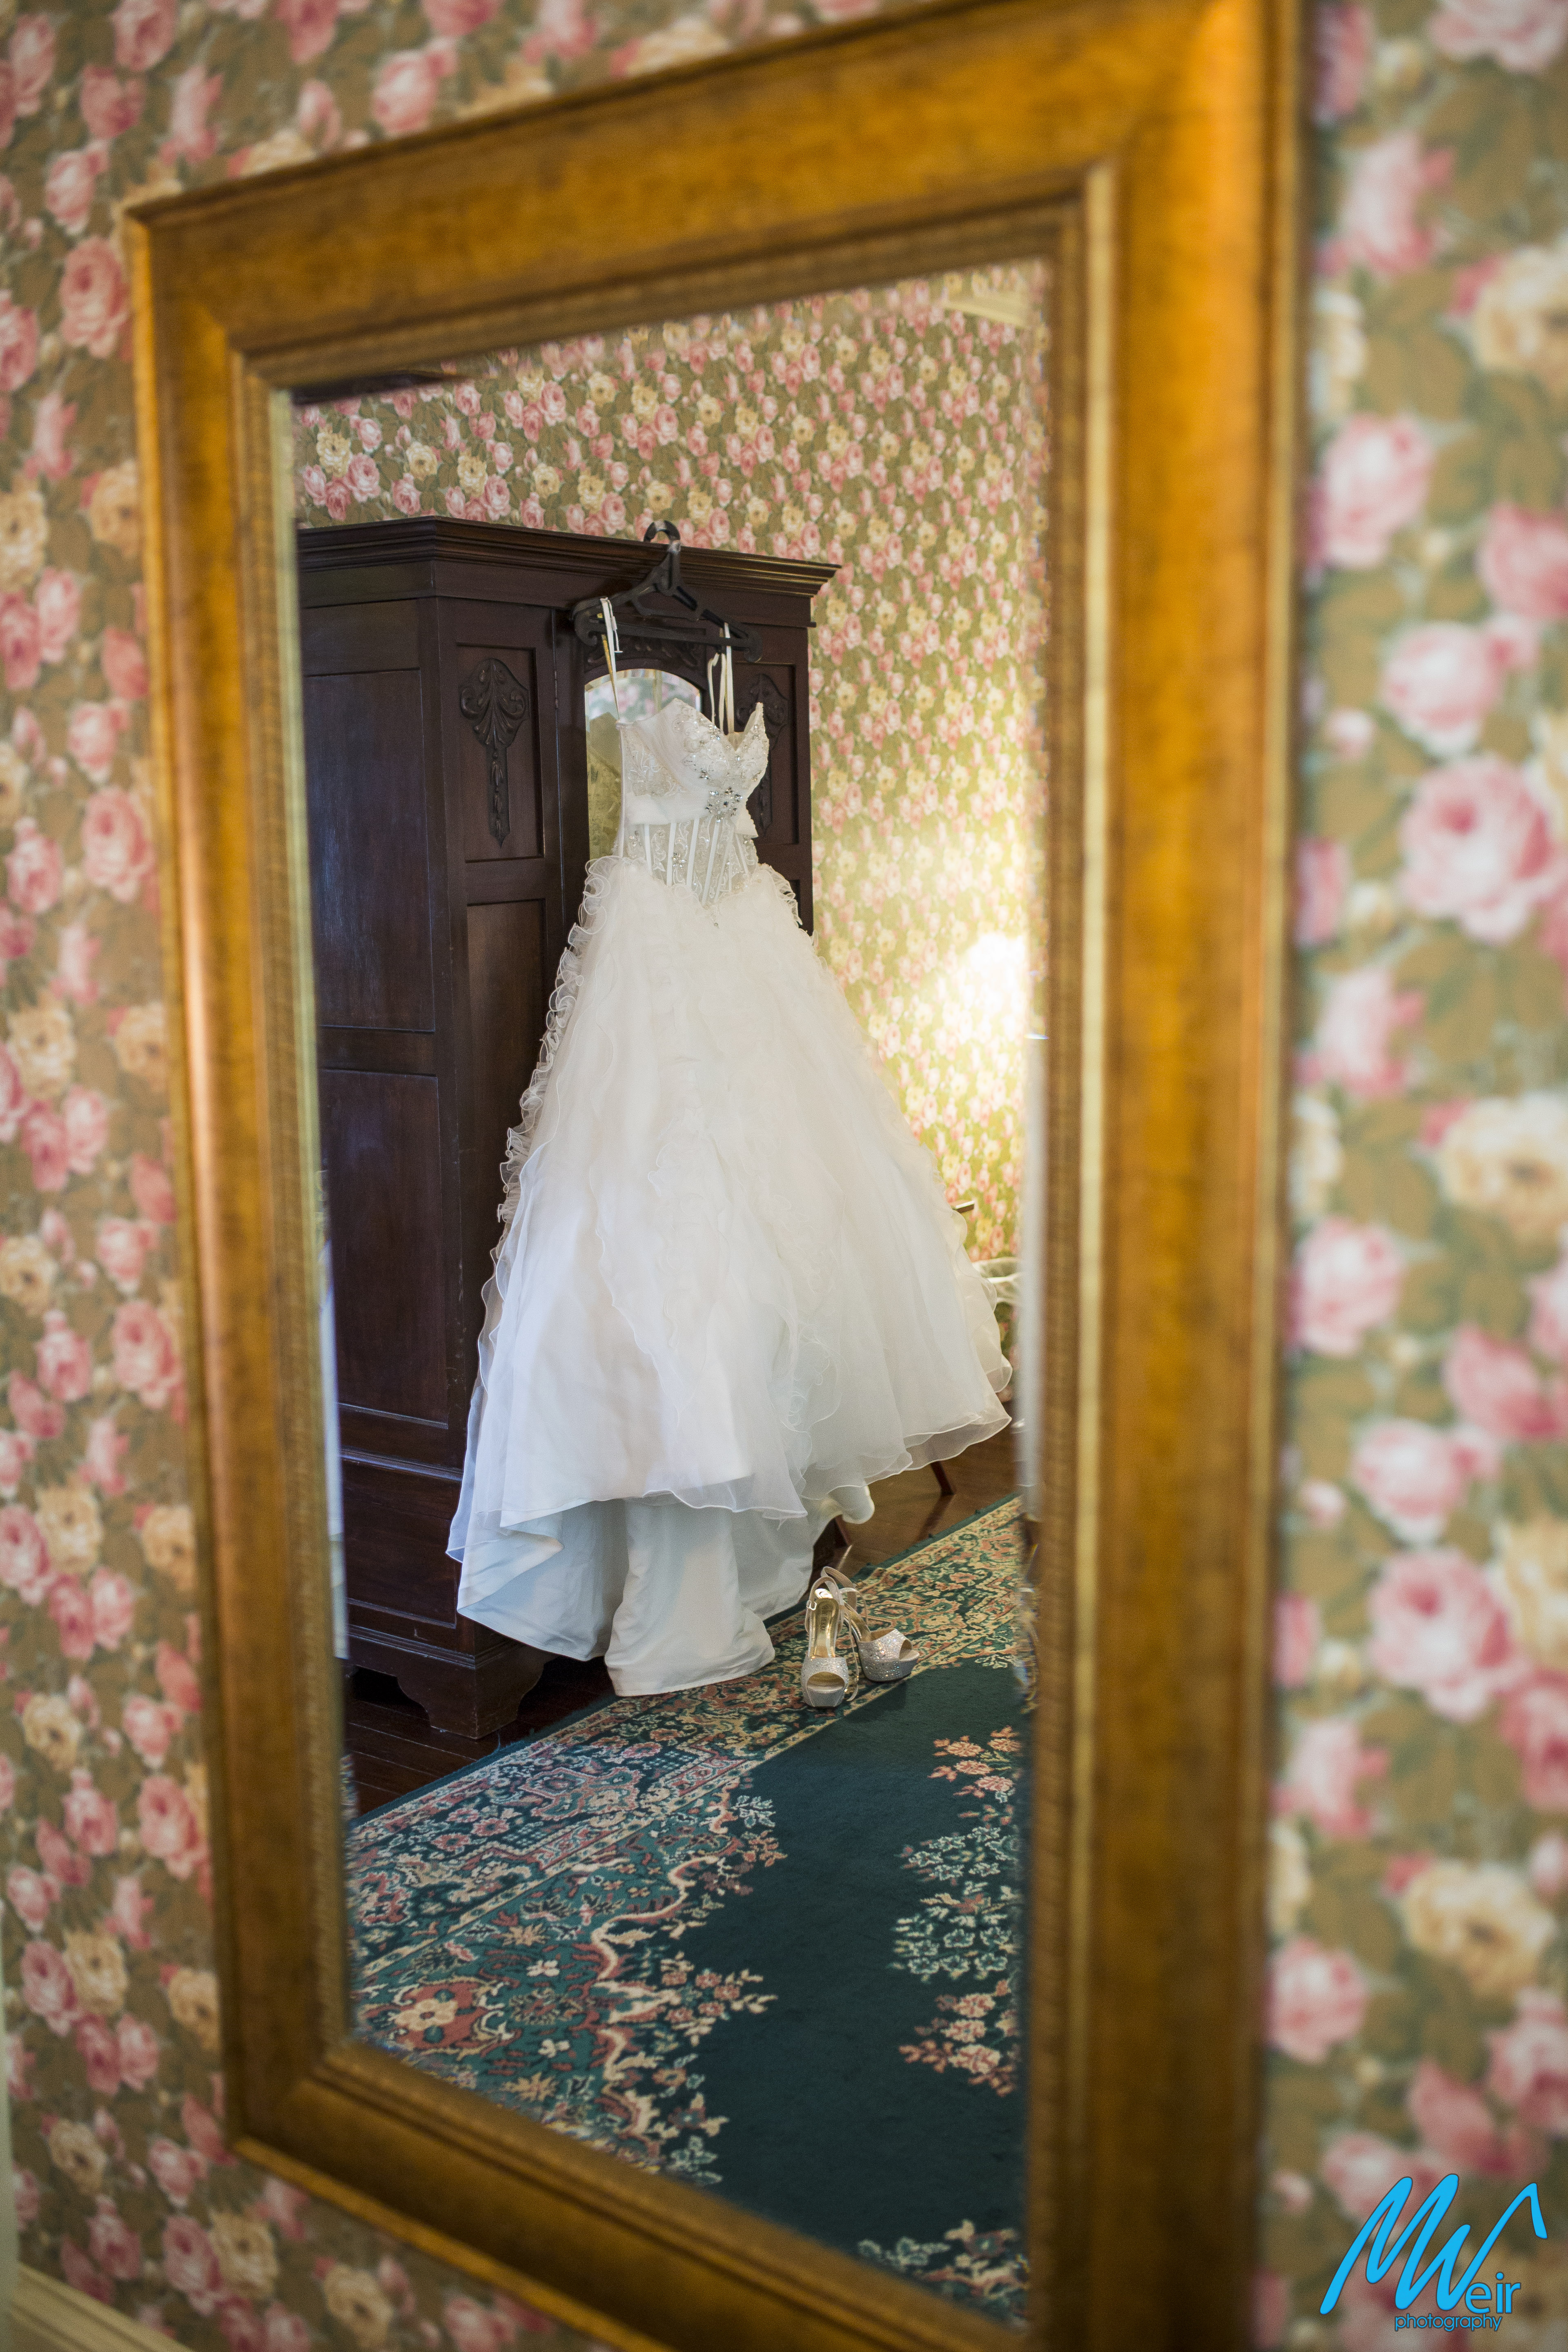 Bride's white wedding gown in the mirror